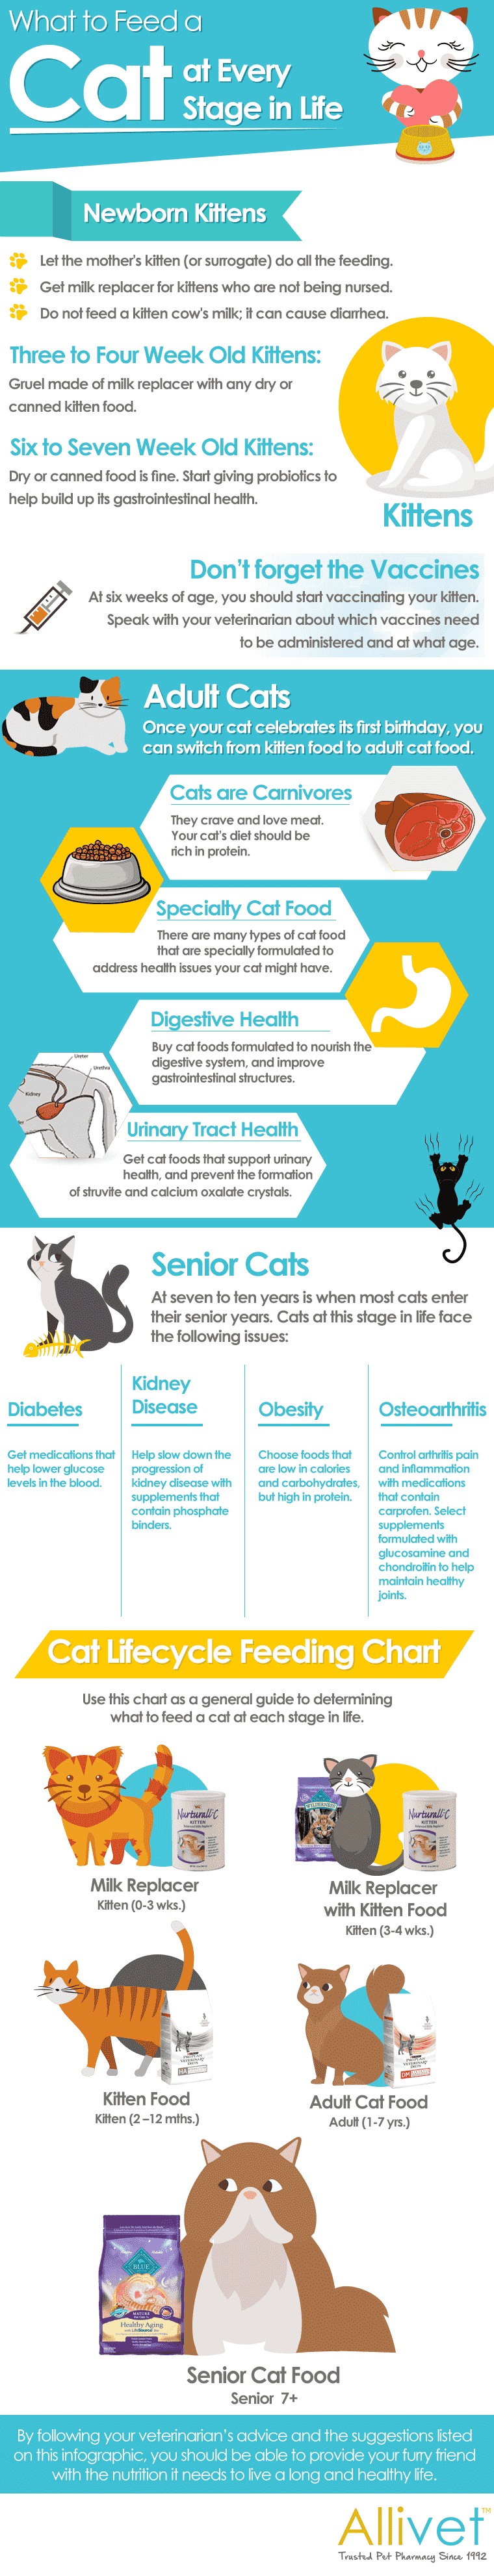 Allivet Cat Food Infographic